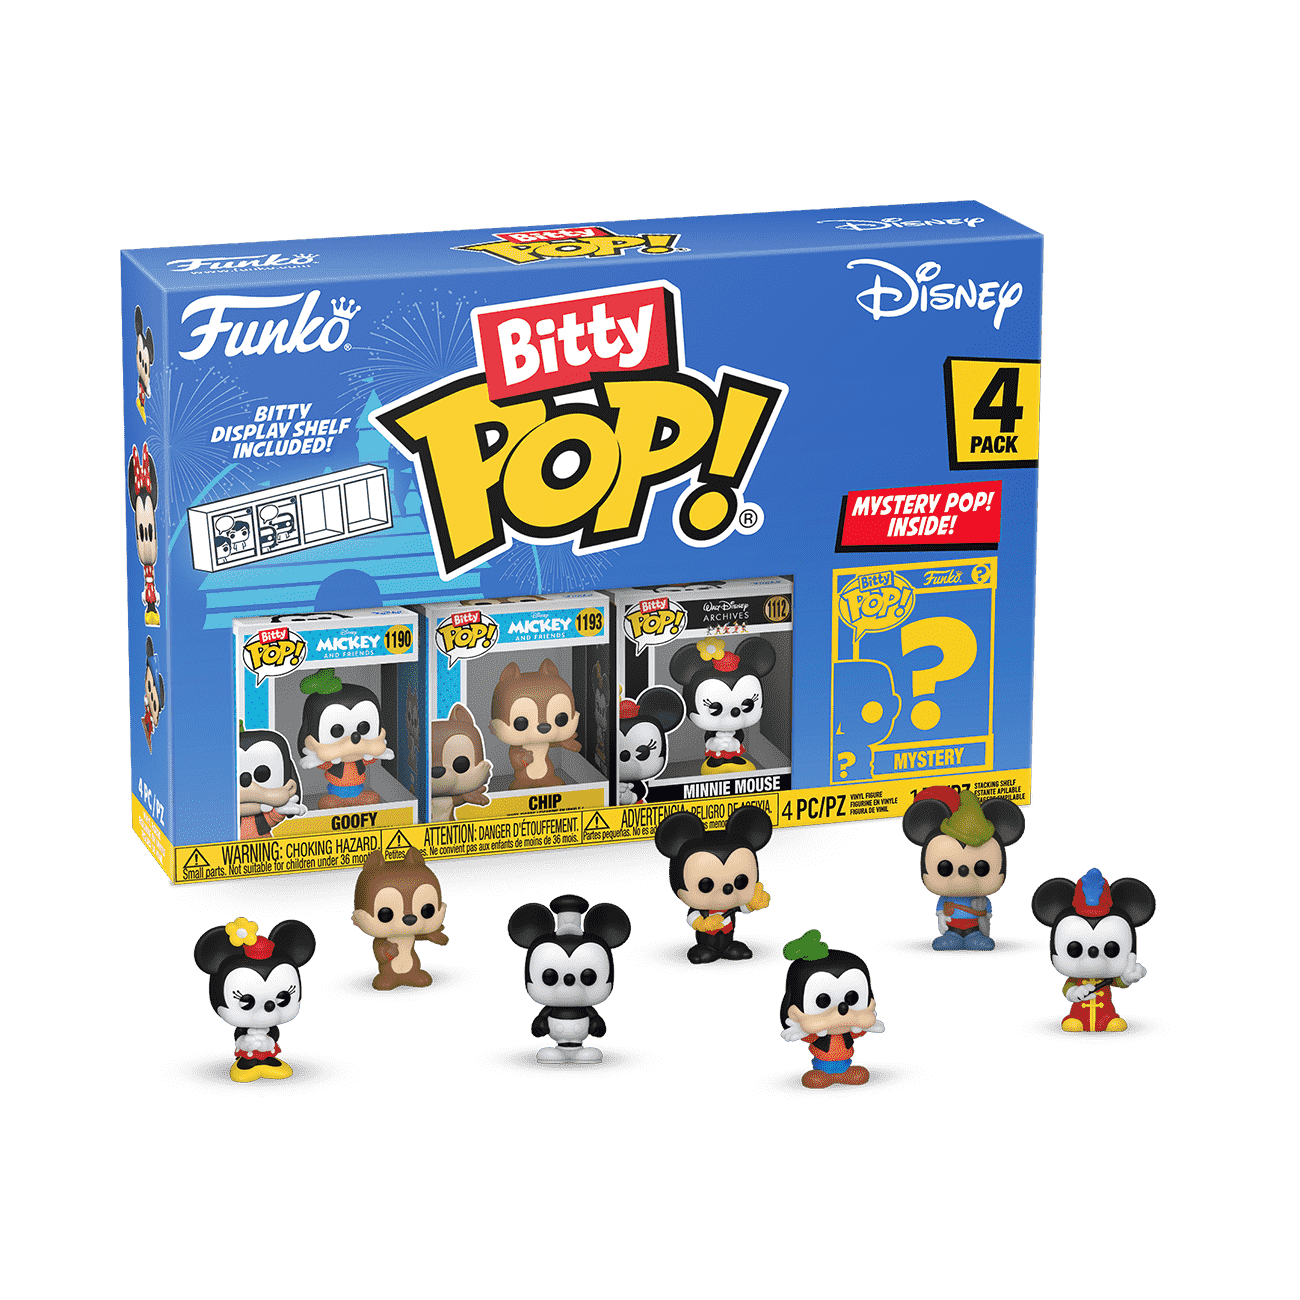 Buy Bitty Pop! Disney 4-Pack Series 4 at Funko.